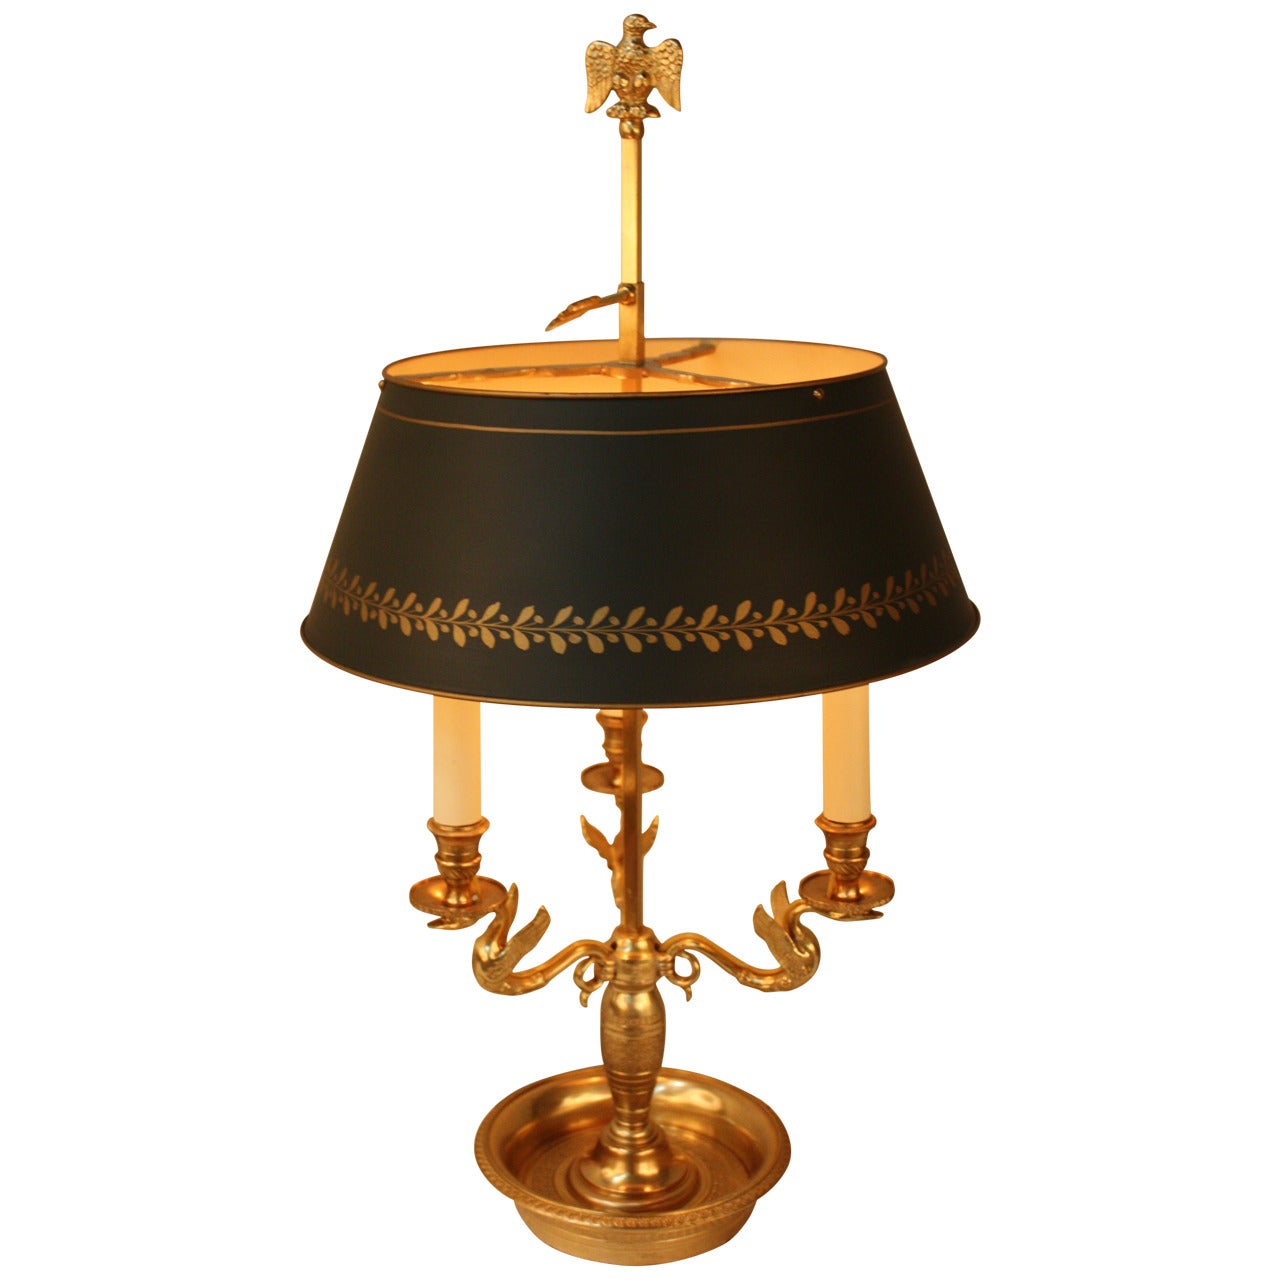 French Bouillotte Desk Lamp